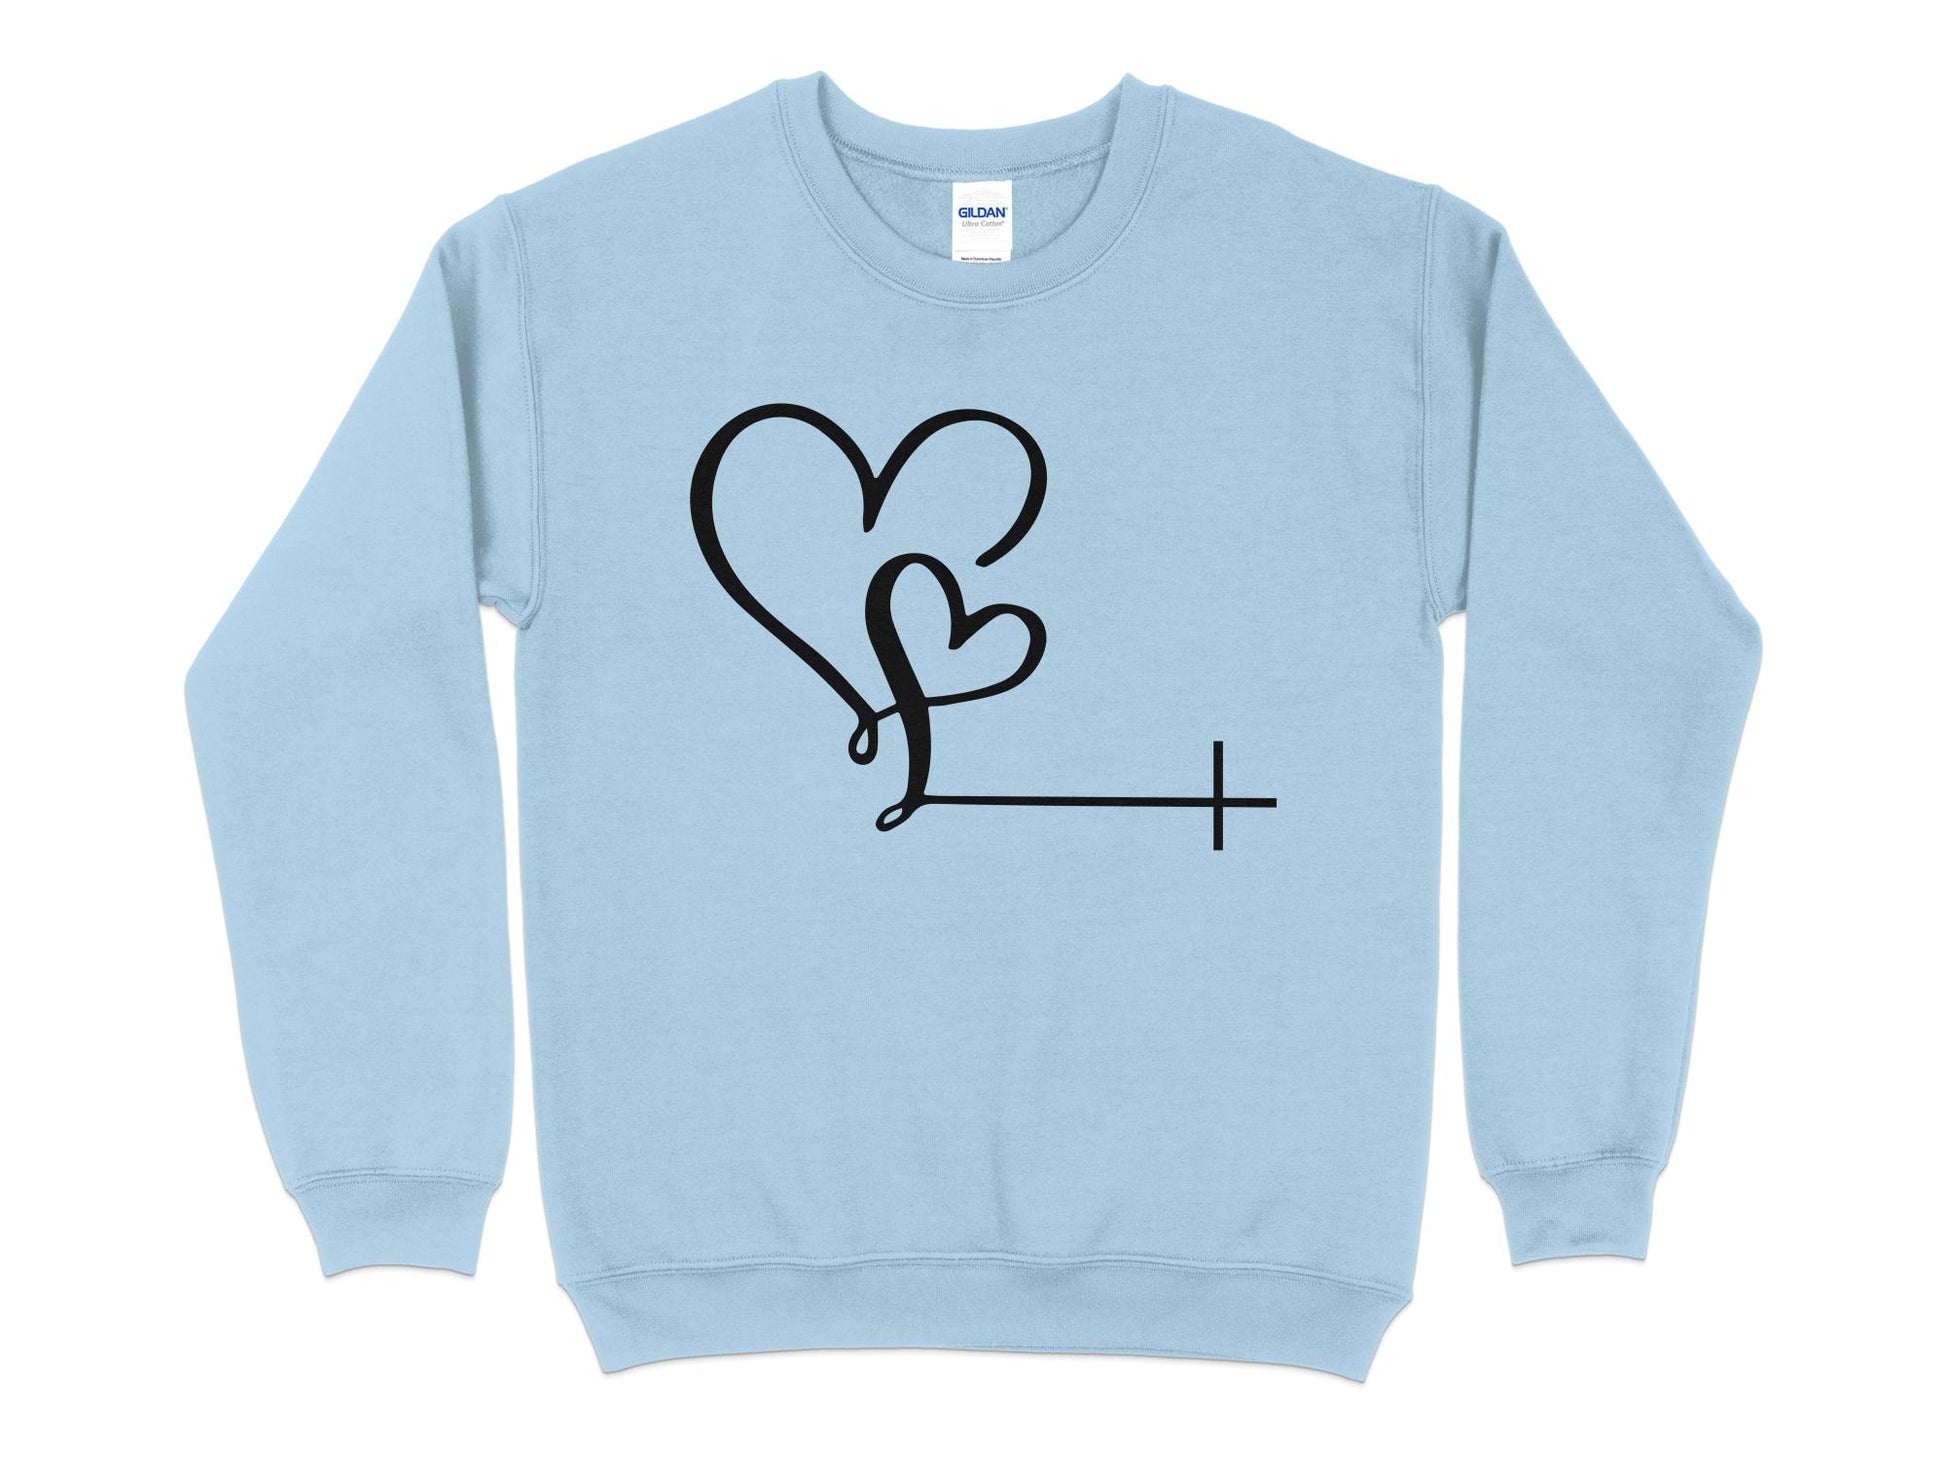 Unisex Love Heart Christian Sweatshirt, Casual Pullover,Gift for Him and Her, Cozy Apparel, Christian Faith Shirt - Mardonyx Sweatshirt S / Light Blue